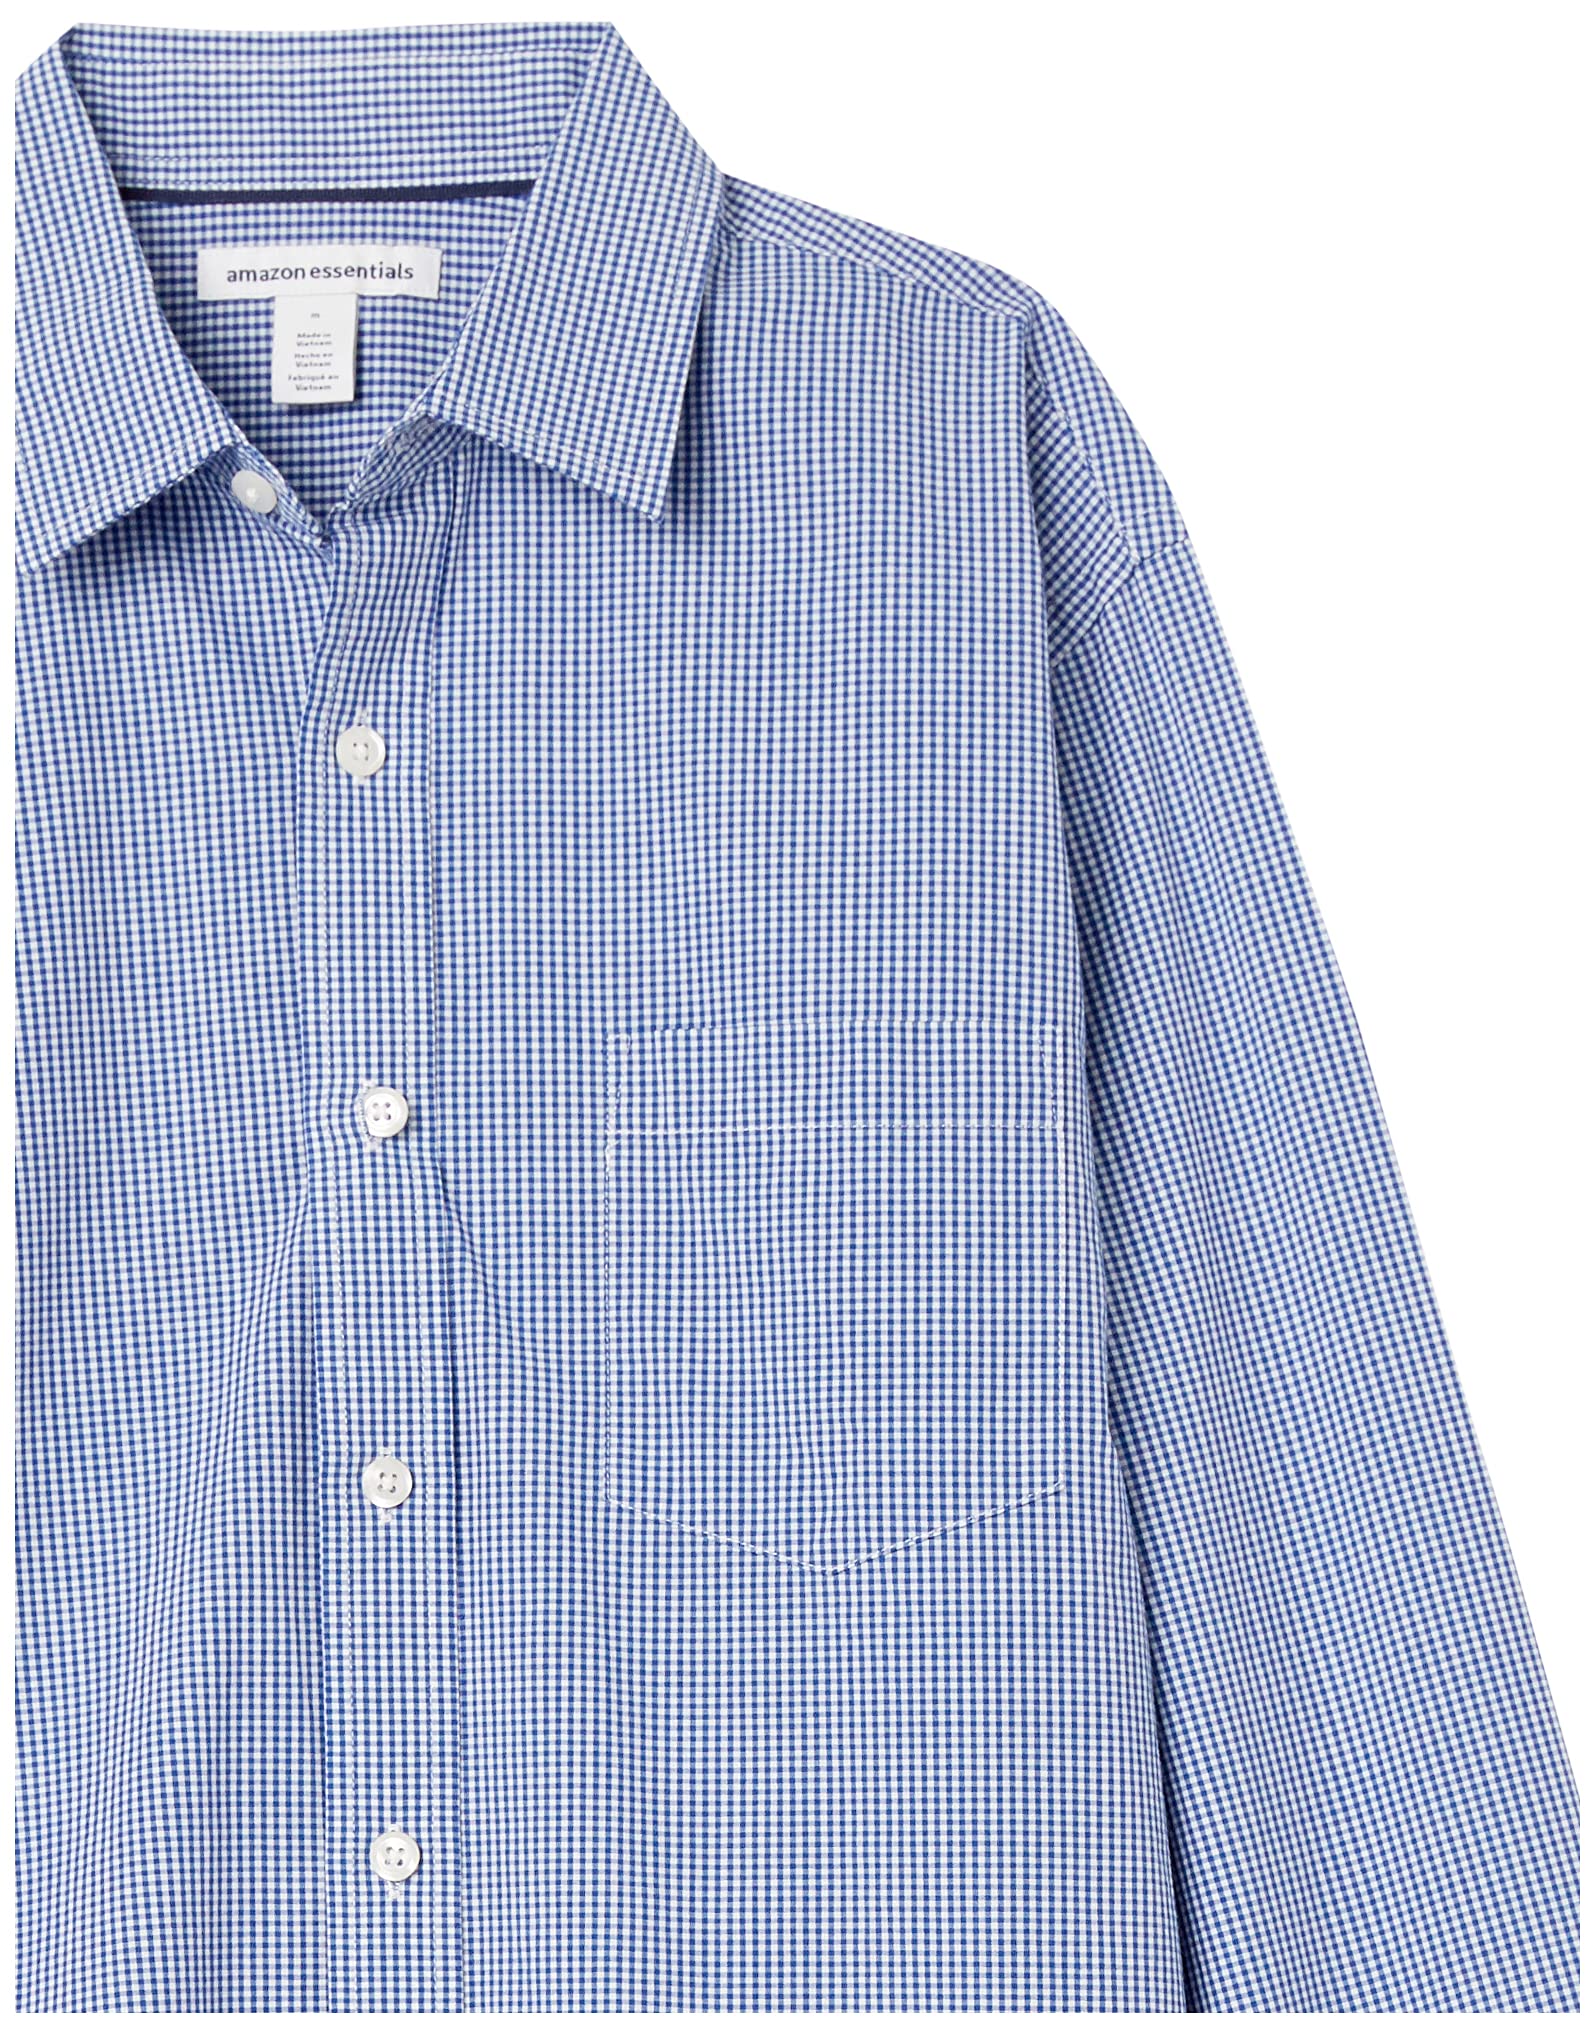 Amazon Essentials Men's Regular-Fit Long-Sleeve Casual Poplin Shirt, Blue Gingham, Large